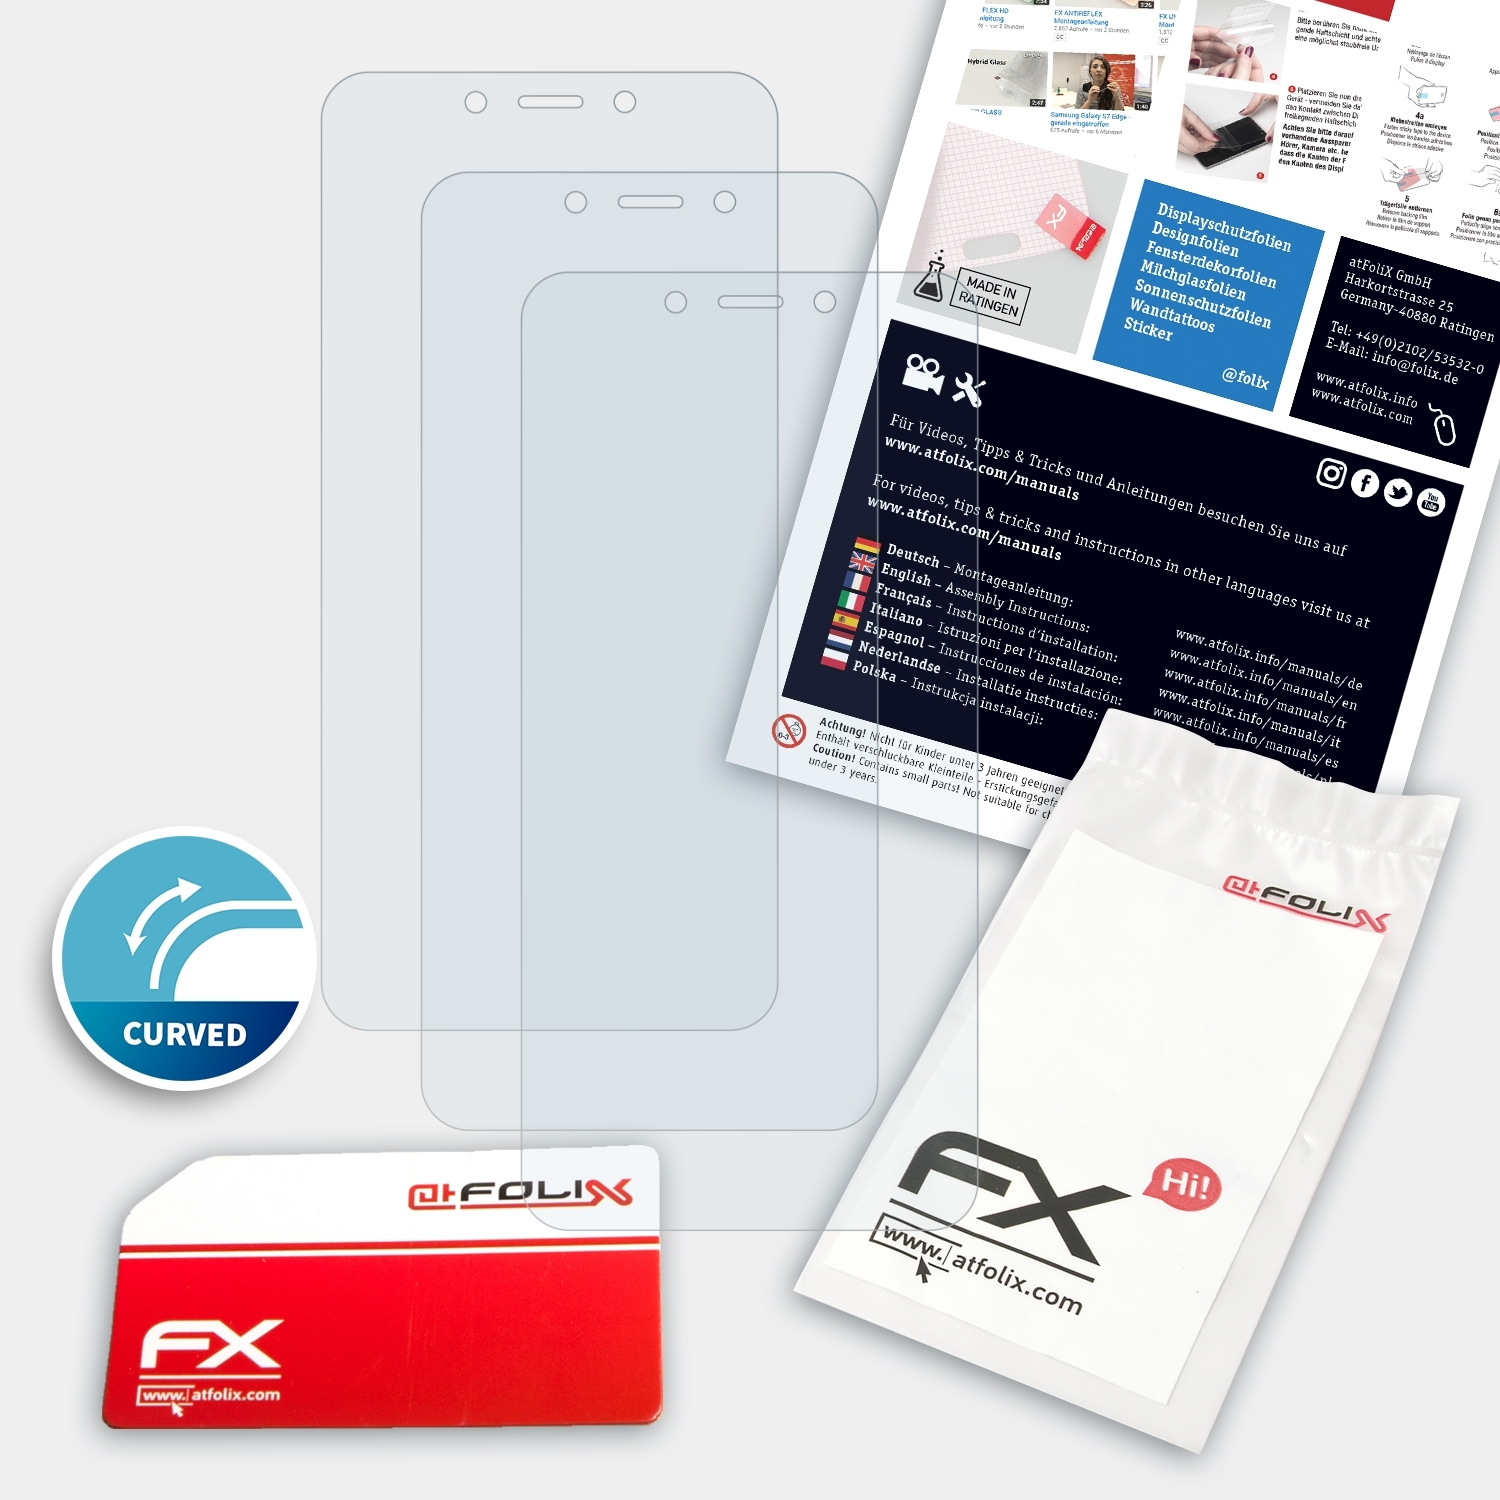 ATFOLIX Xiaomi 6A) Displayschutz(für FX-ActiFleX Redmi 3x